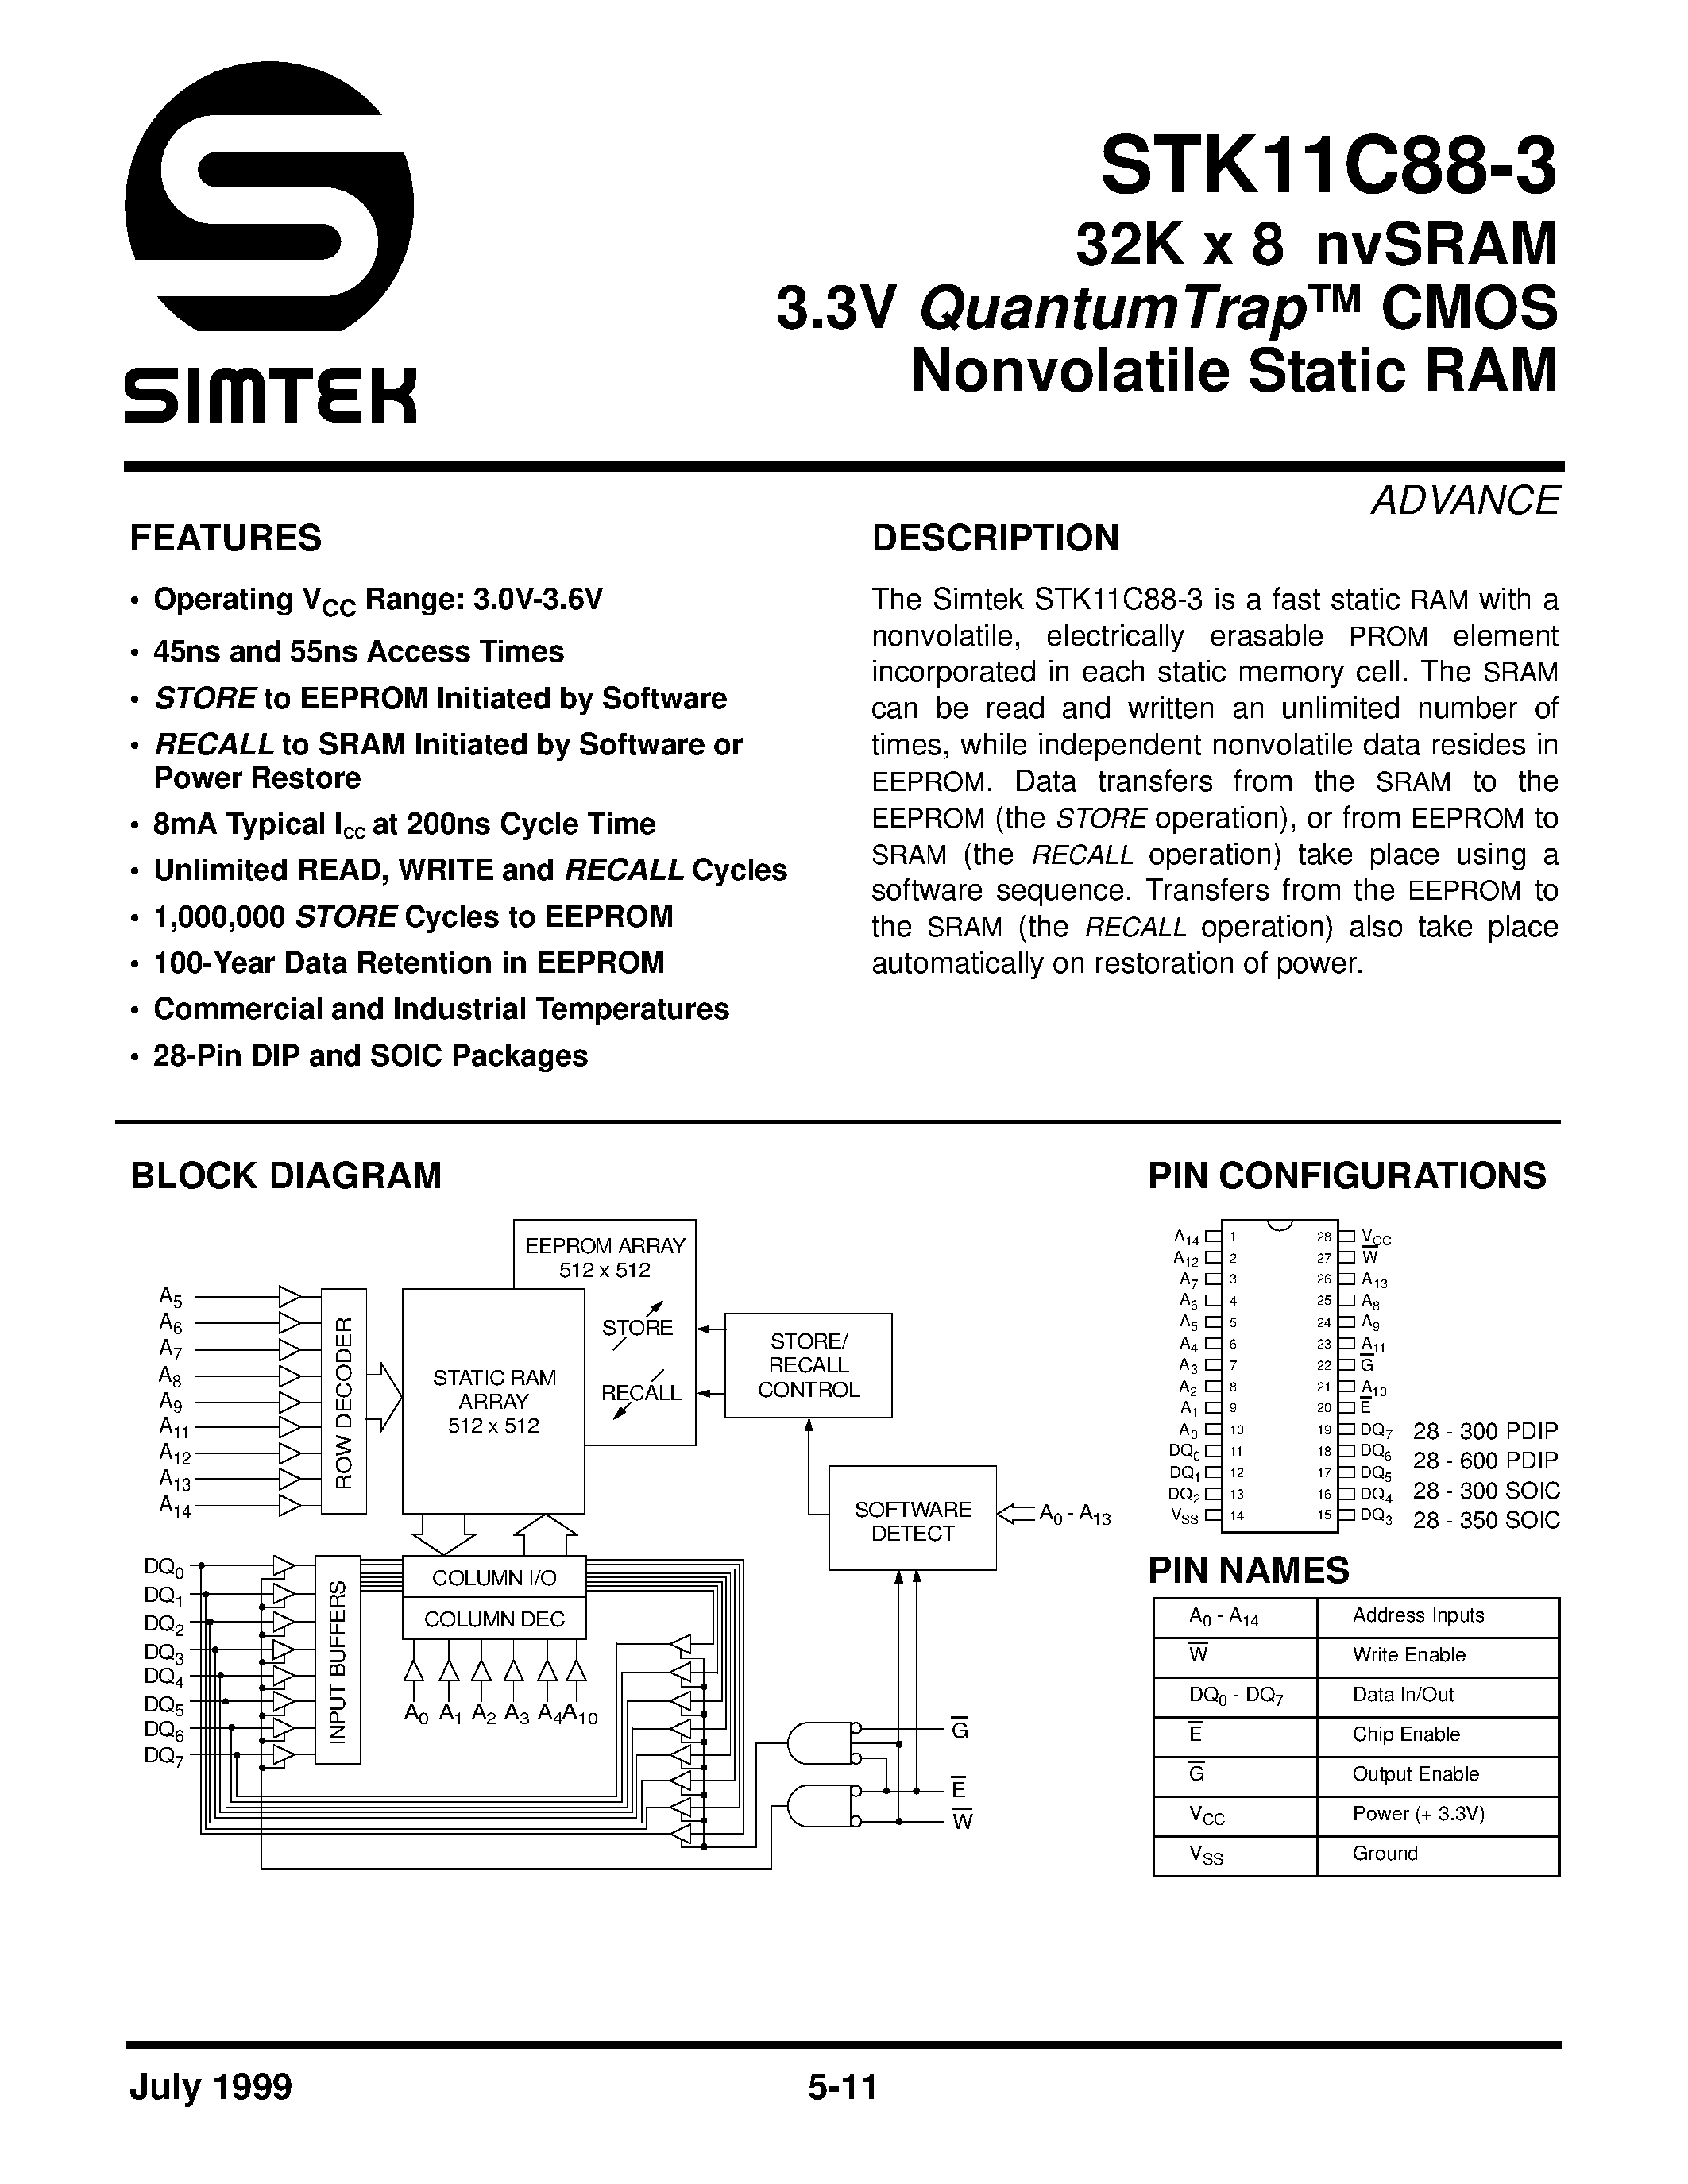 Даташит STK11C88-3 - 32K X 8 NVSRAM 3.3 V QUANTUM TRAP CMOS NONVOLATILE STATIC RAM страница 1